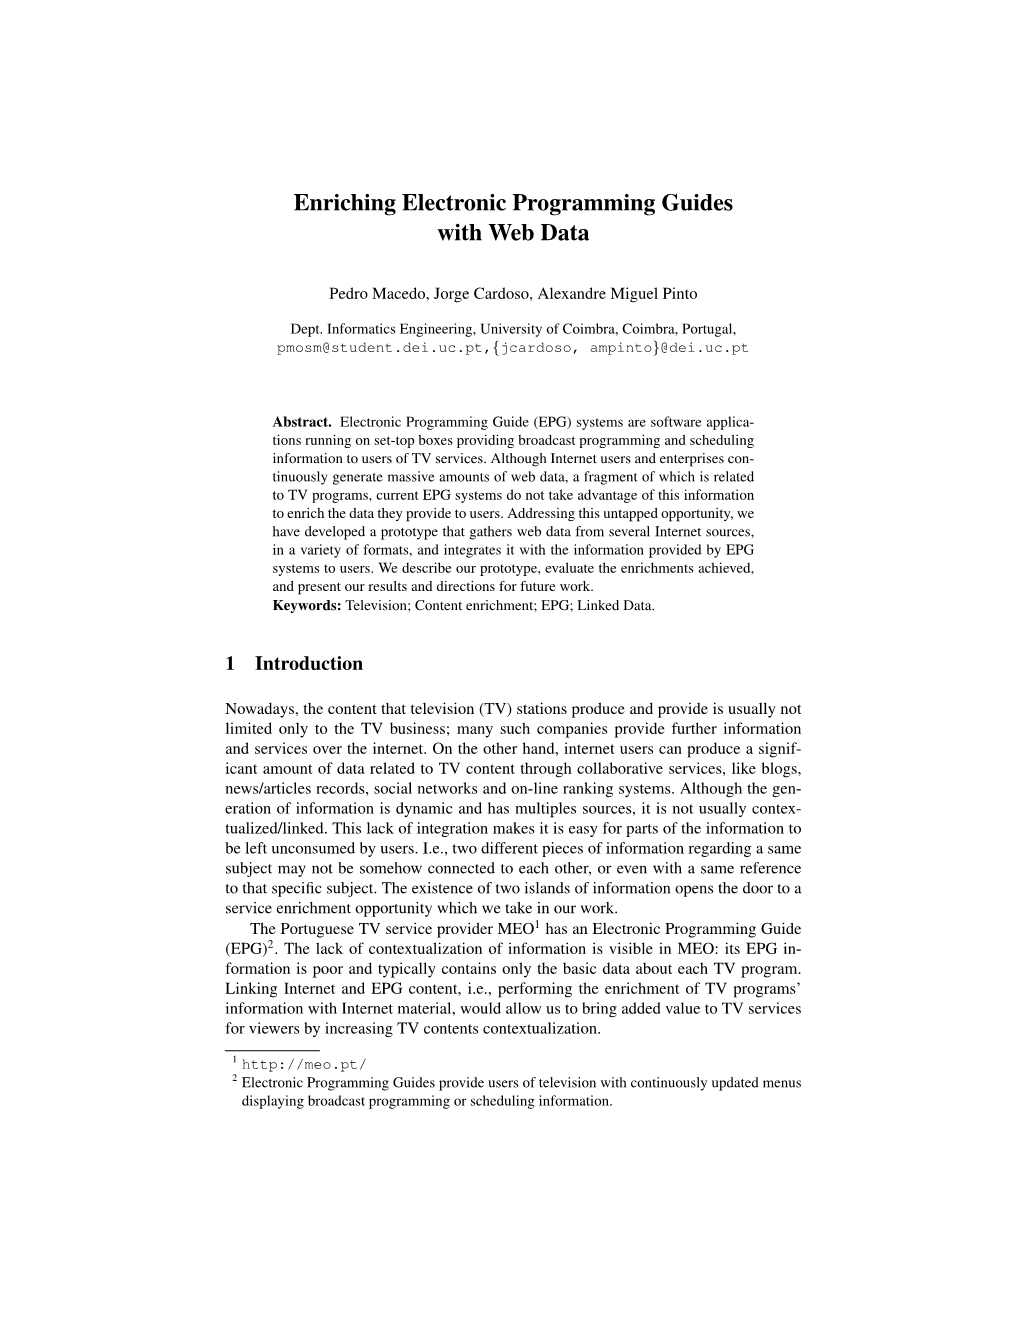 Enriching Electronic Programming Guides with Web Data